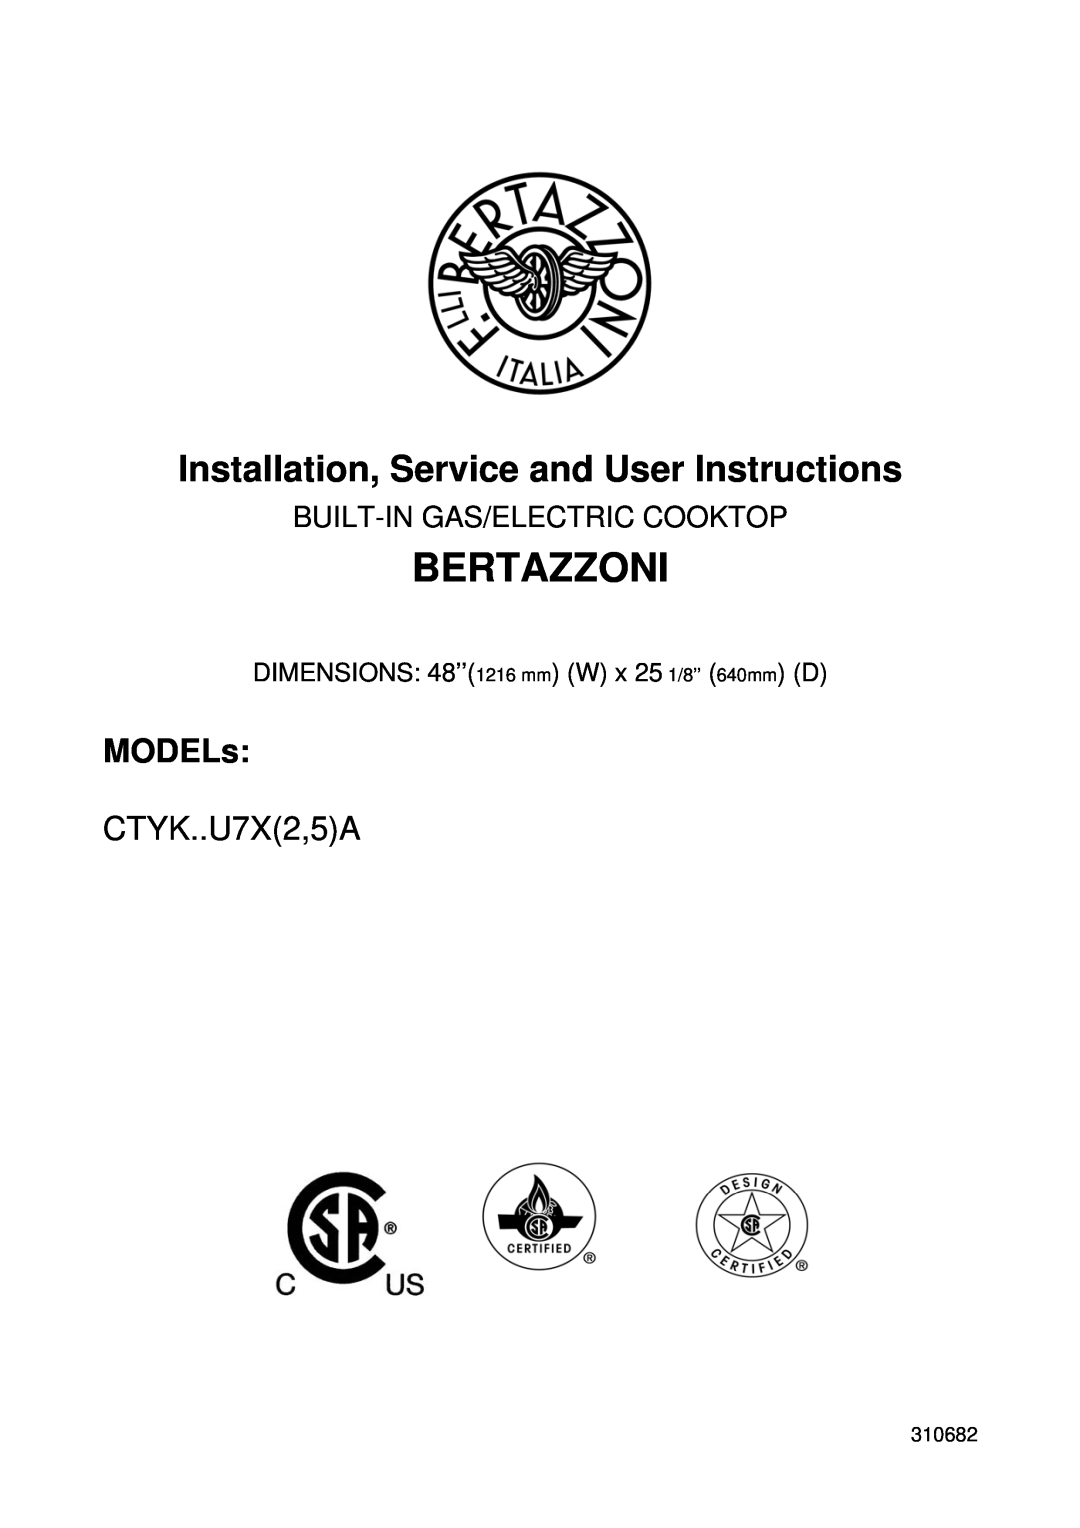 Bertazzoni CTYK..U7X(2,5)A dimensions CTYK..U7X2,5A, Built-Ingas/Electric Cooktop, Bertazzoni, MODELs, 310682 